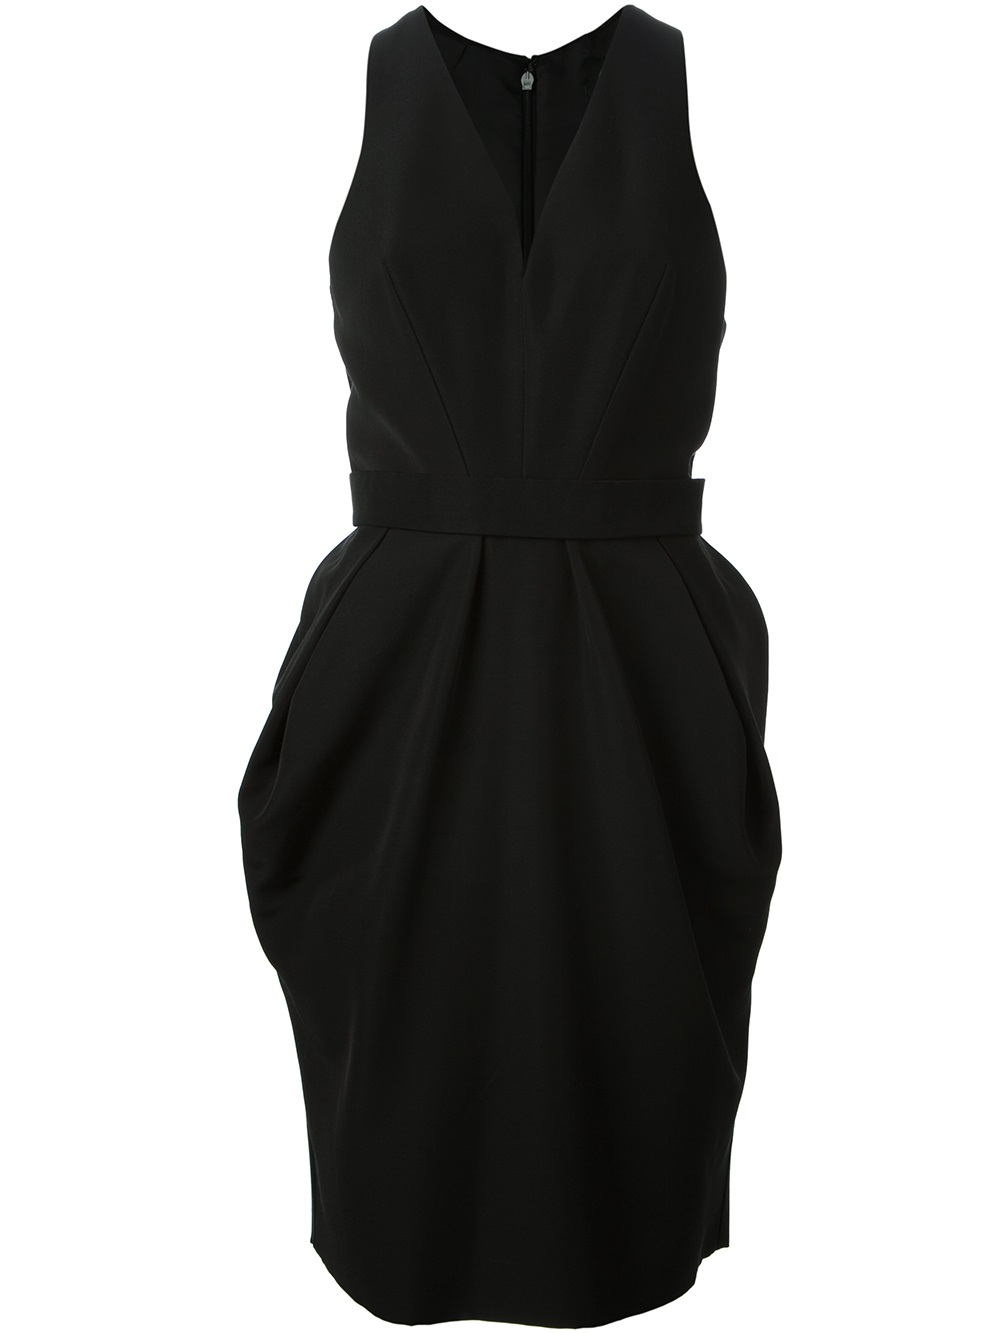 Lyst - Mcq Sleeveless Cocoon Dress in Black